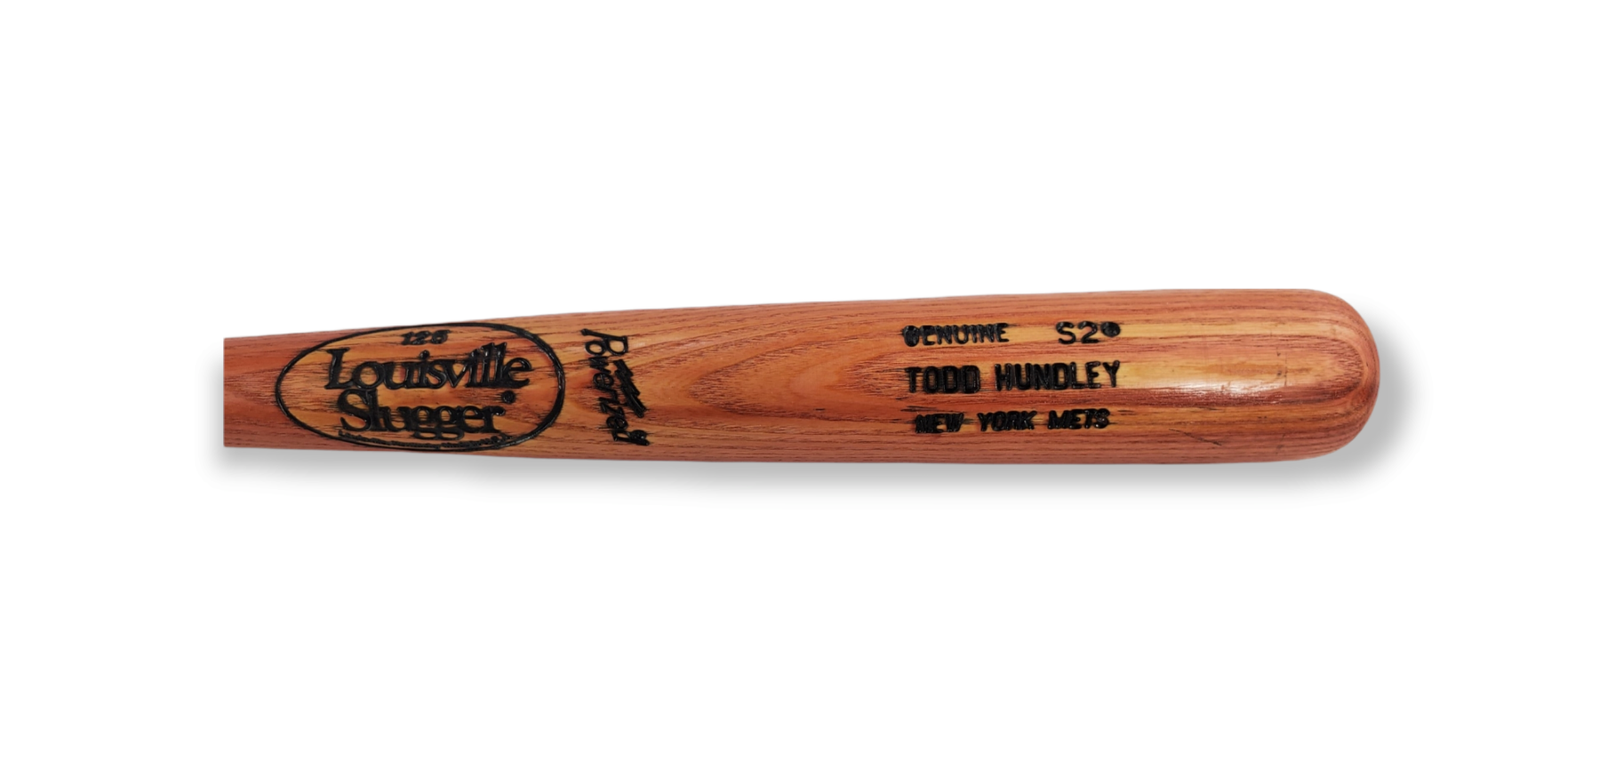 Todd Hundley Game Used Baseball Bat Louisville Slugger S2 New York Mets